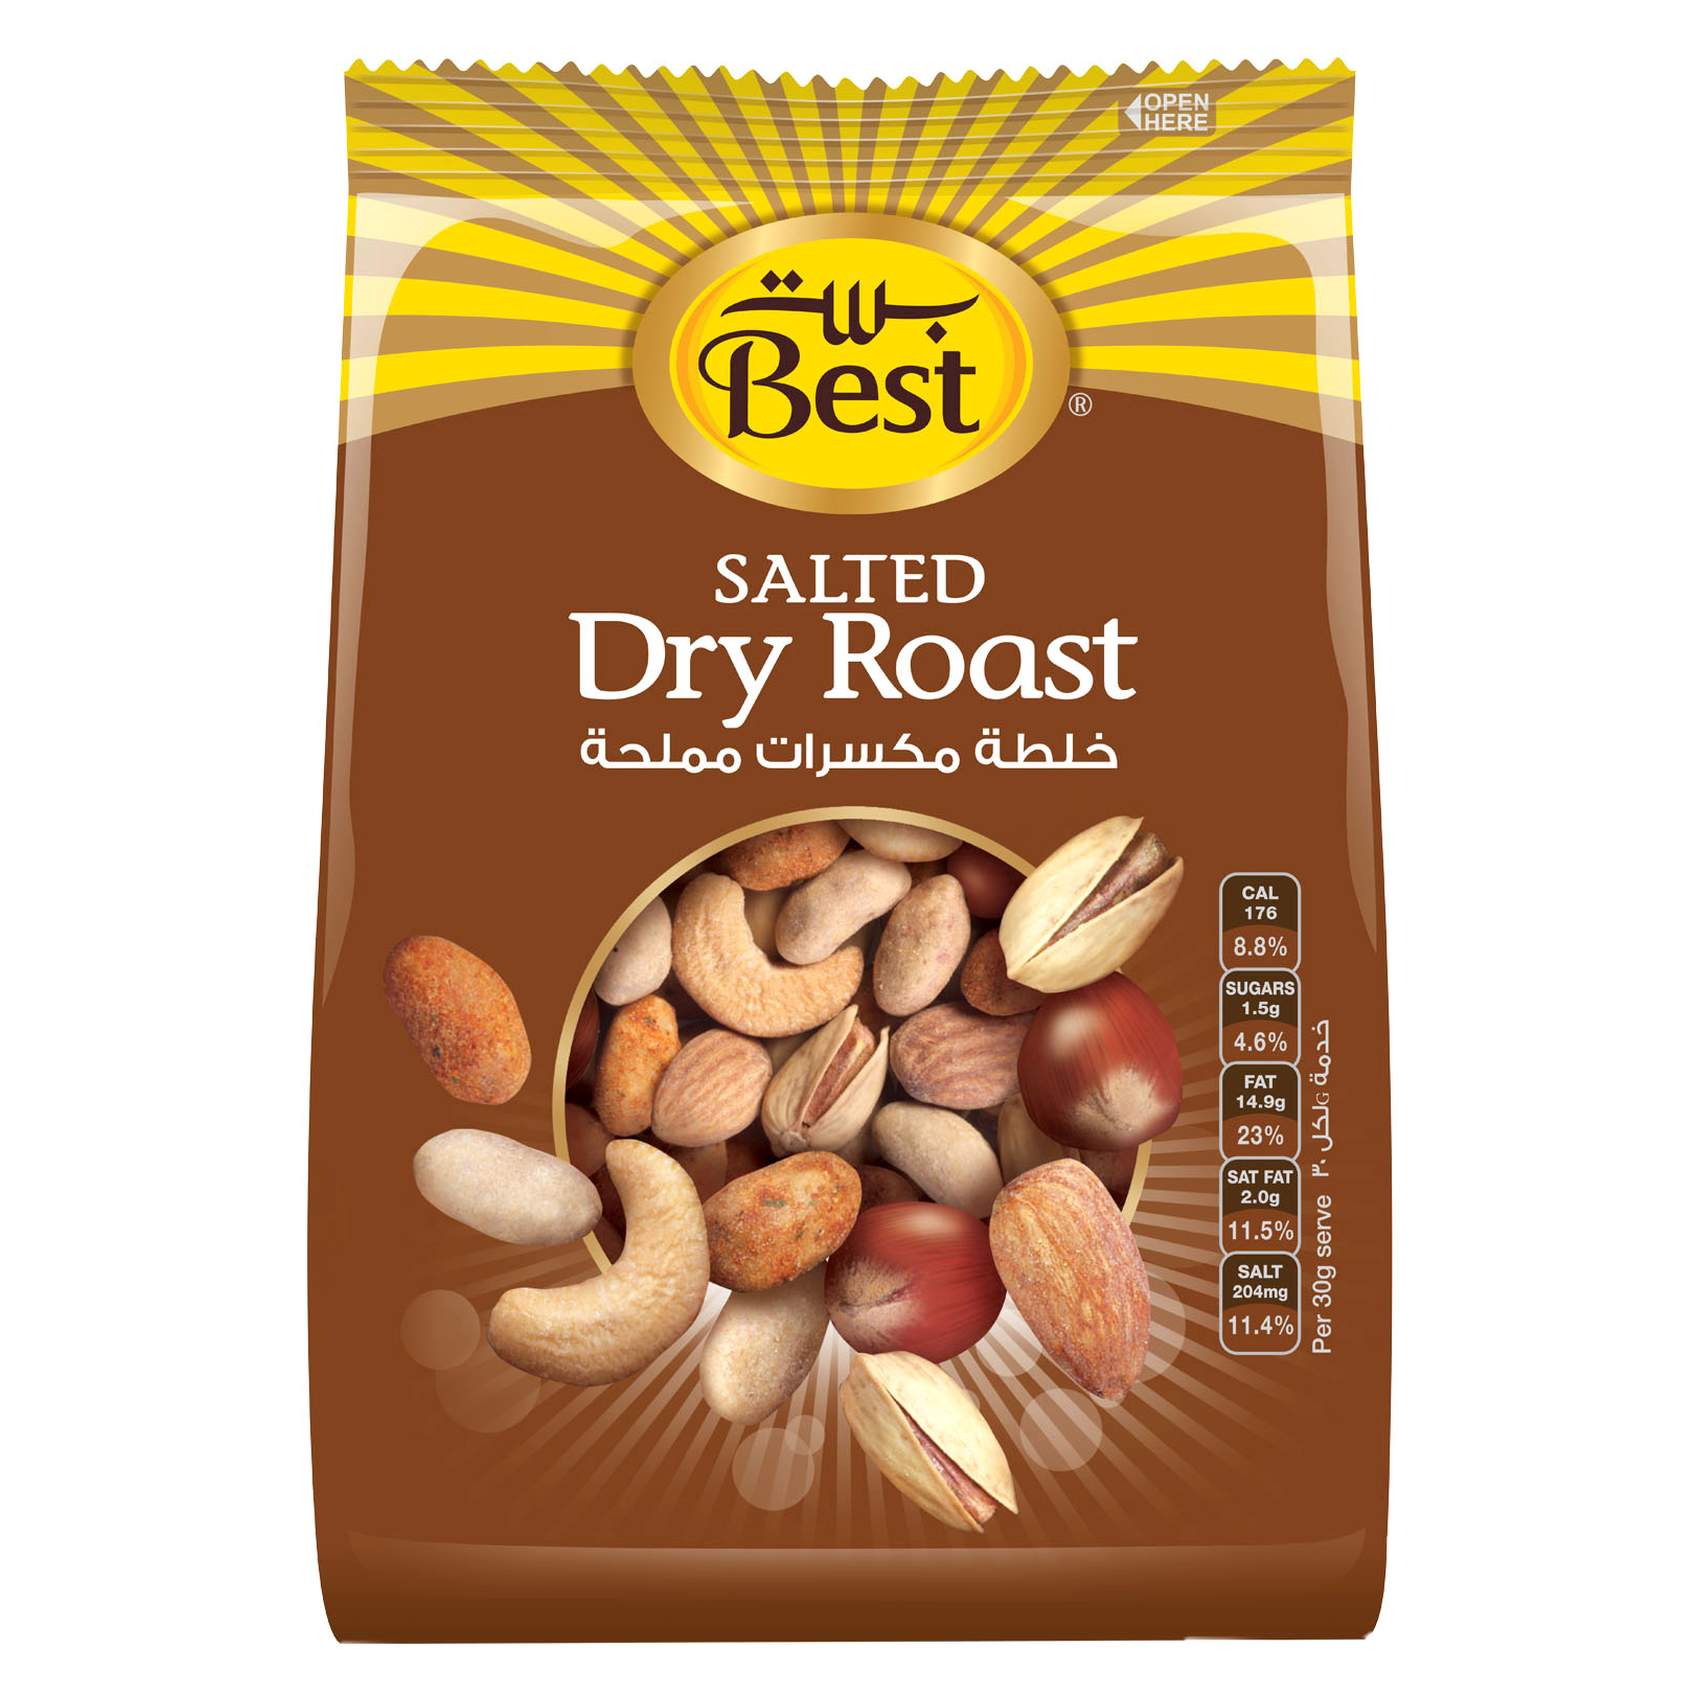 Best Salted Dry Roast 375g